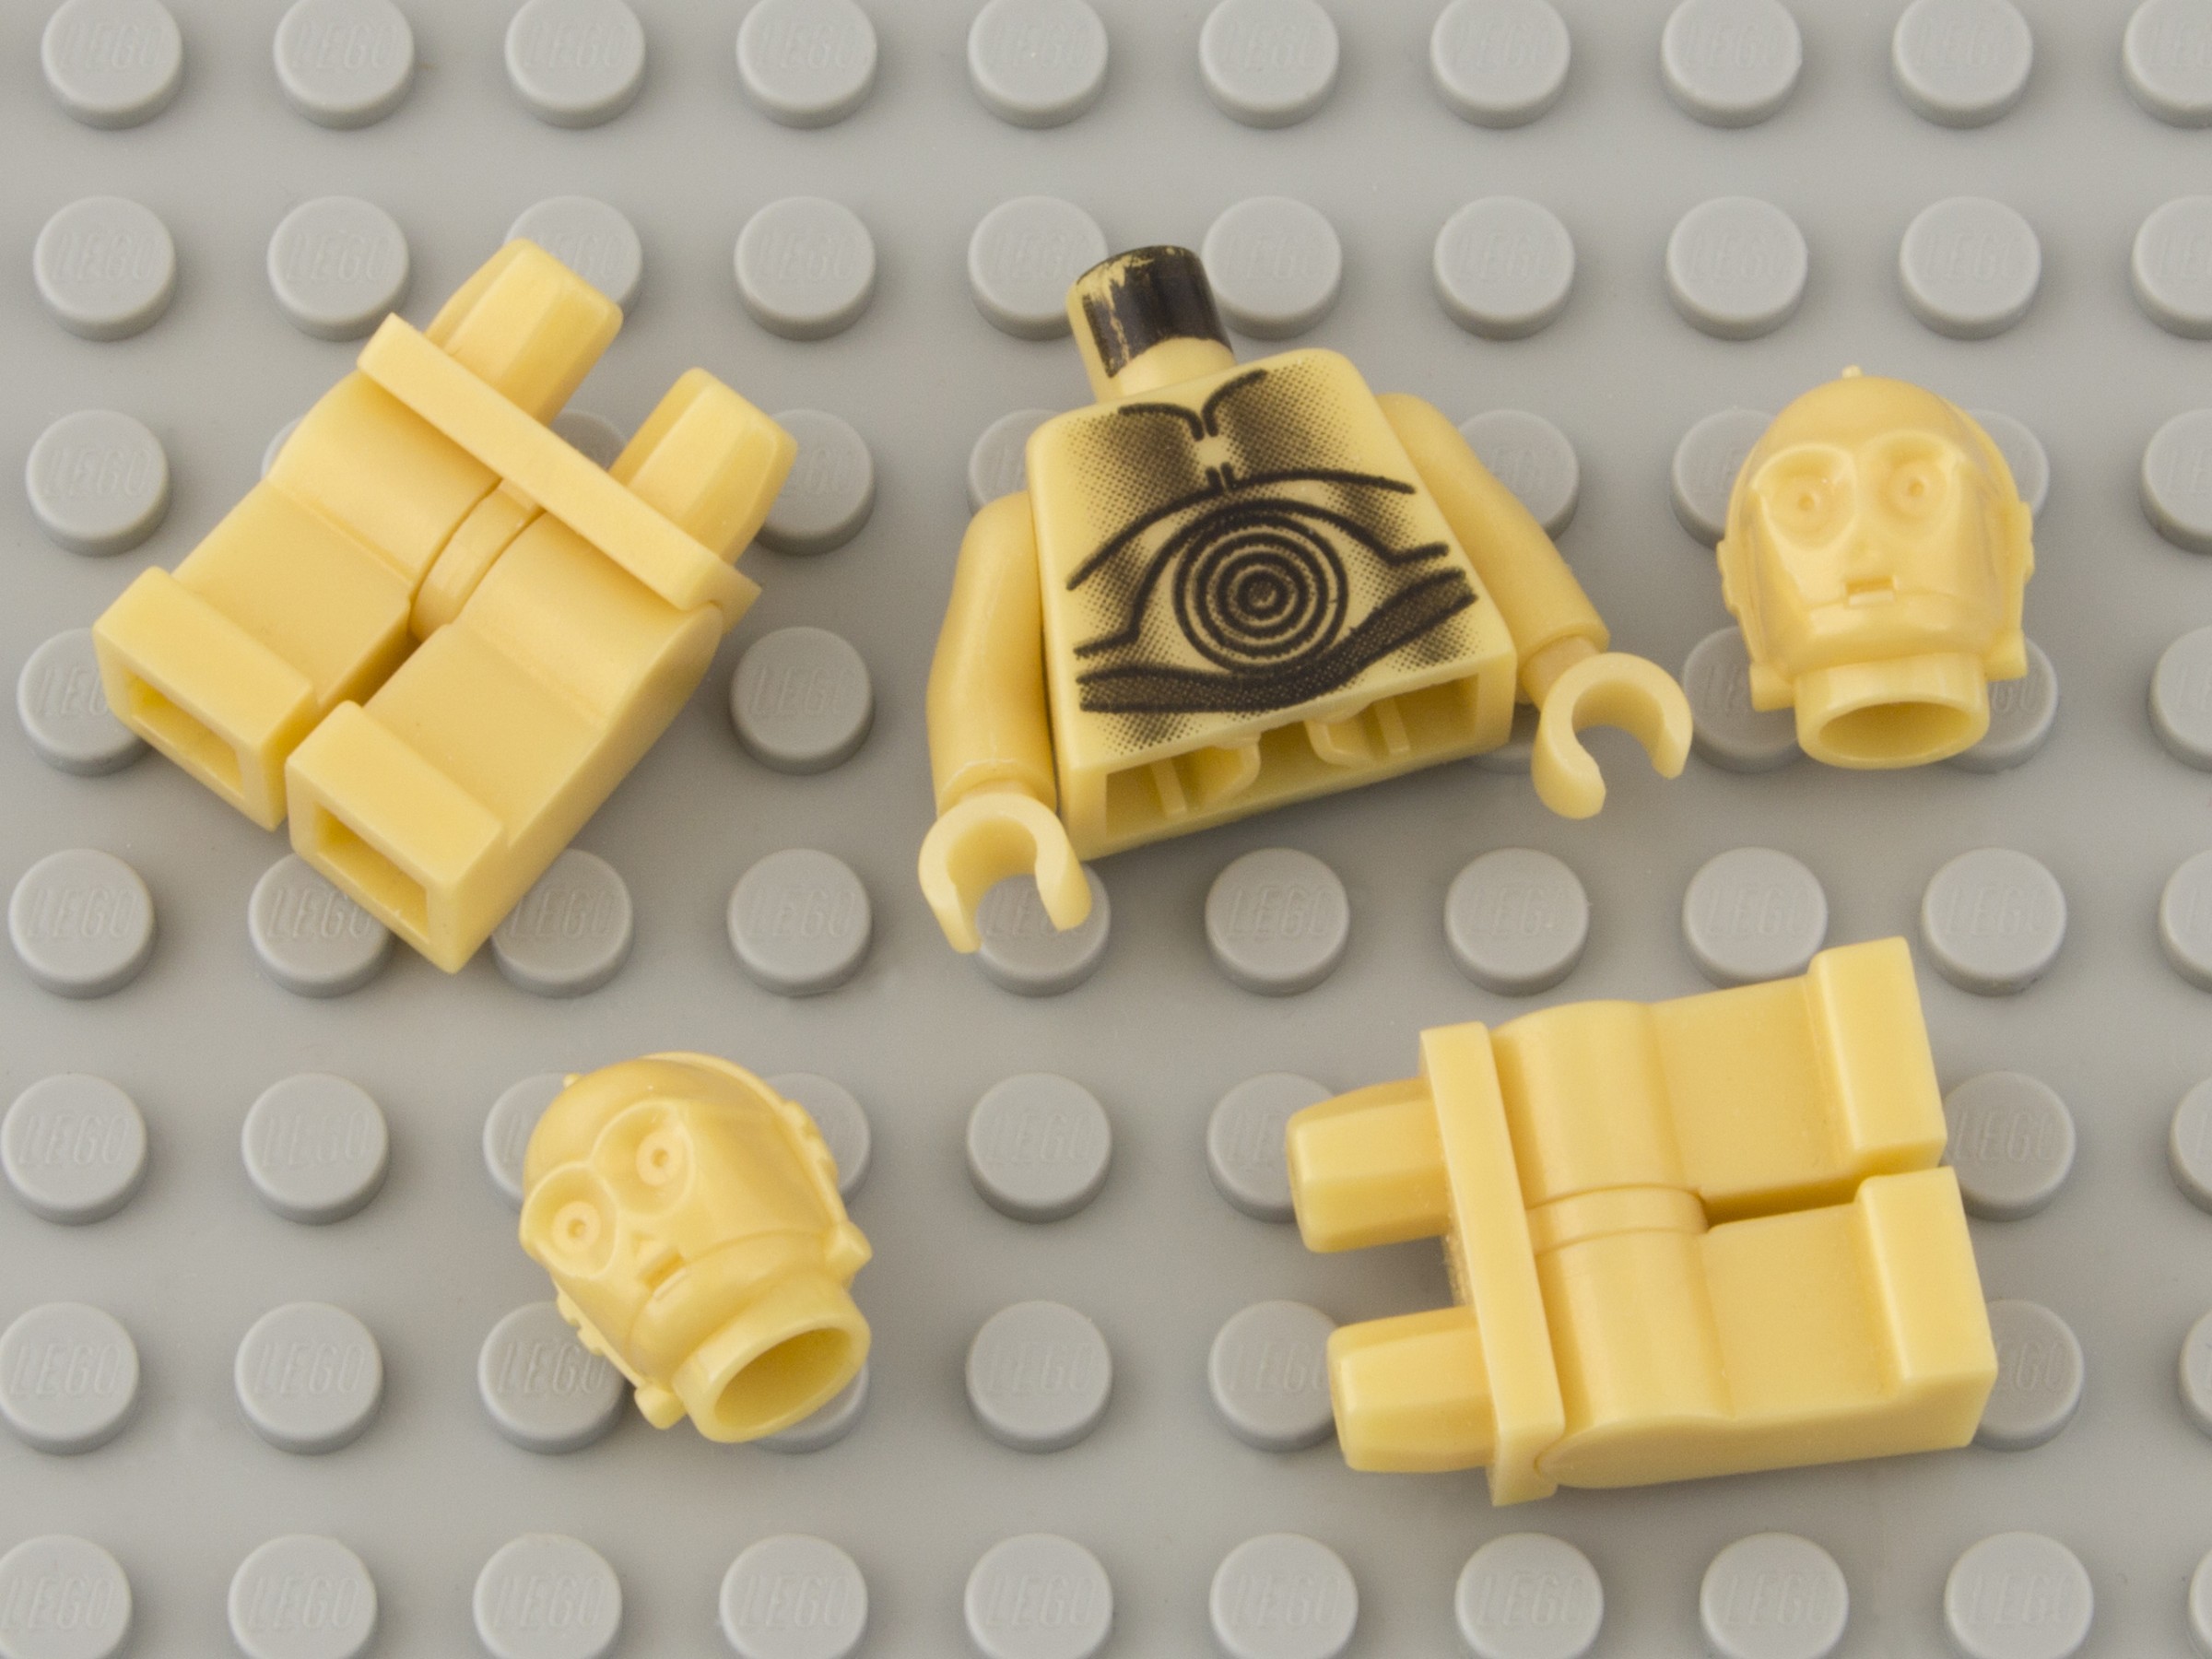 Metal | Brickset: LEGO set guide and database